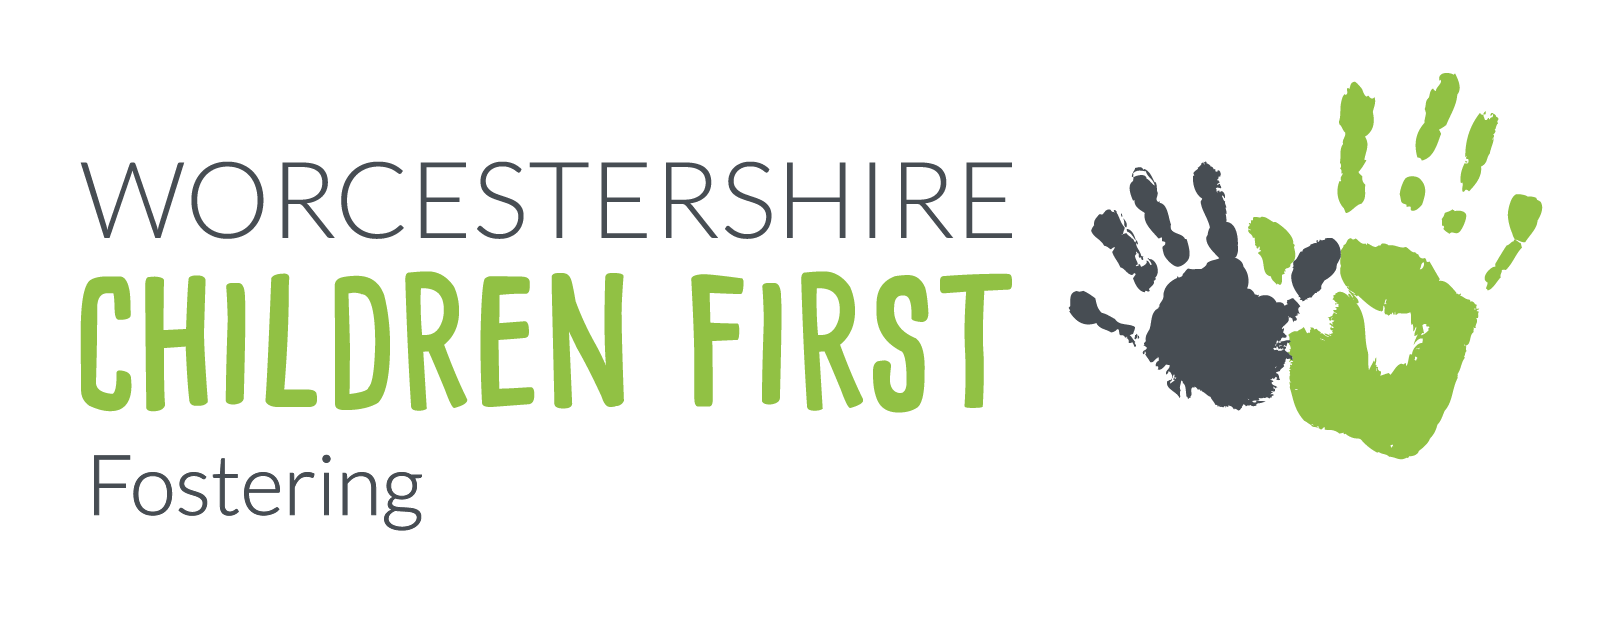 Worcestershire Children's First - Fostering